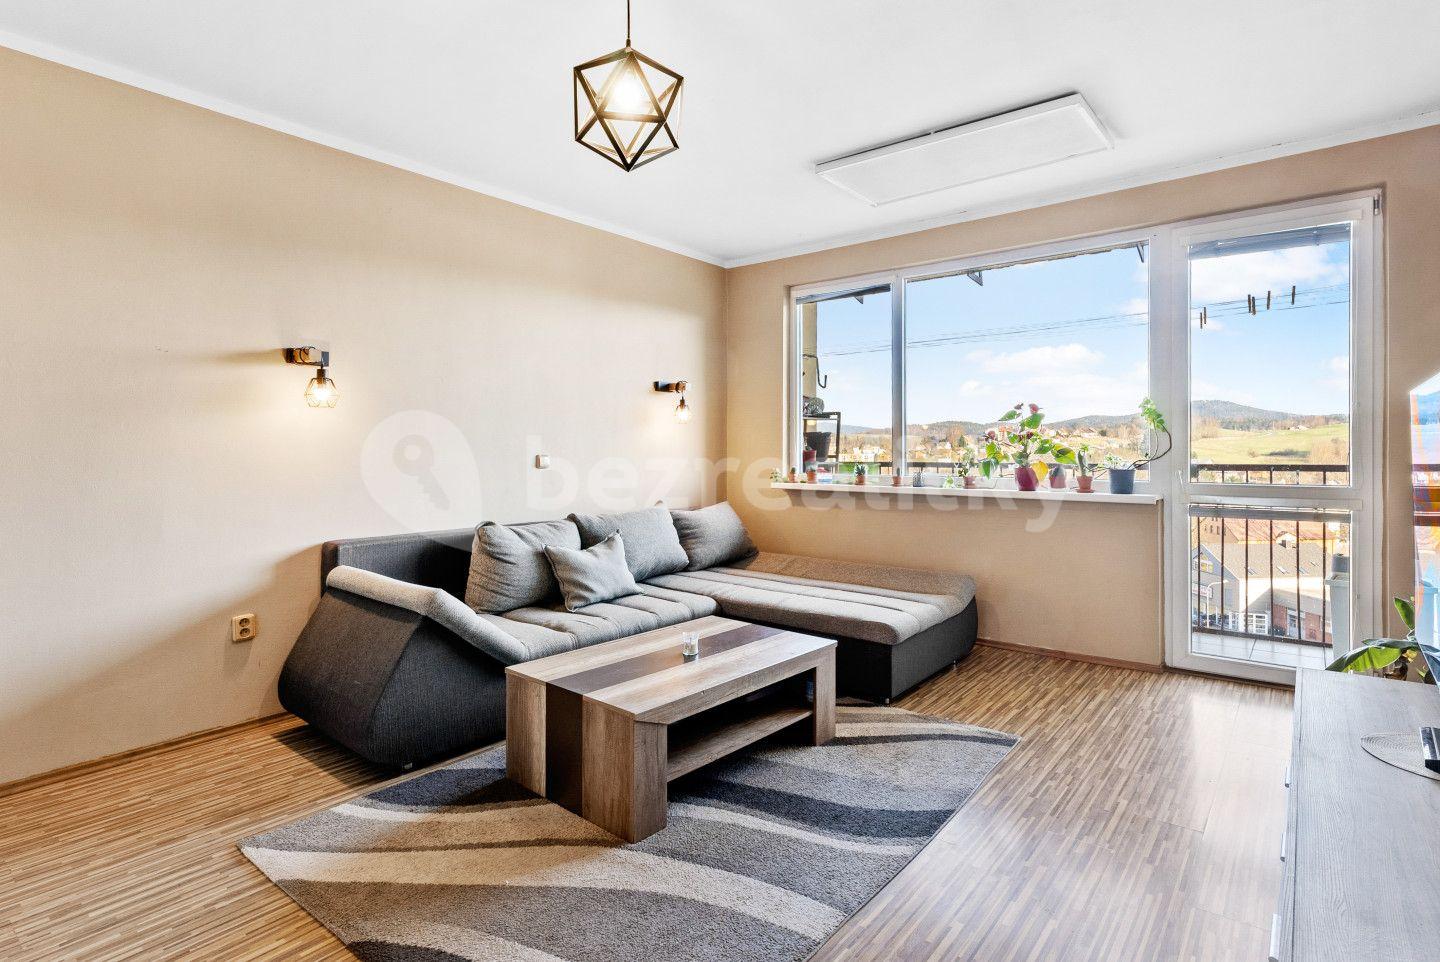 5 bedroom flat for sale, 94 m², Vackova, Liberec, Liberecký Region